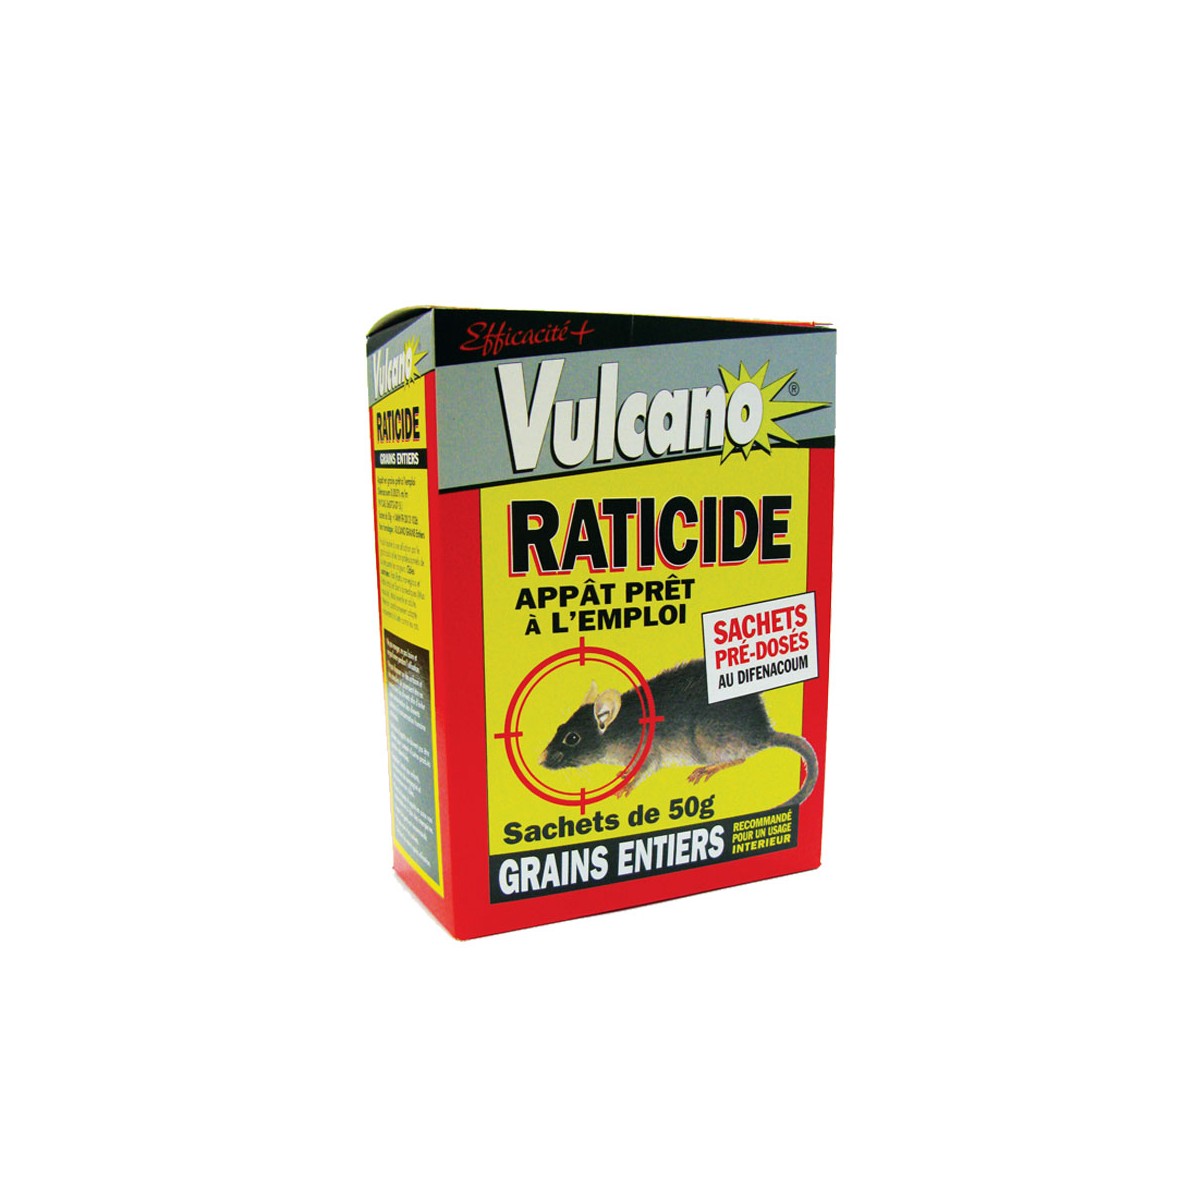 Raticide en grains dispersible 6 sachets de 25g - Vulcano